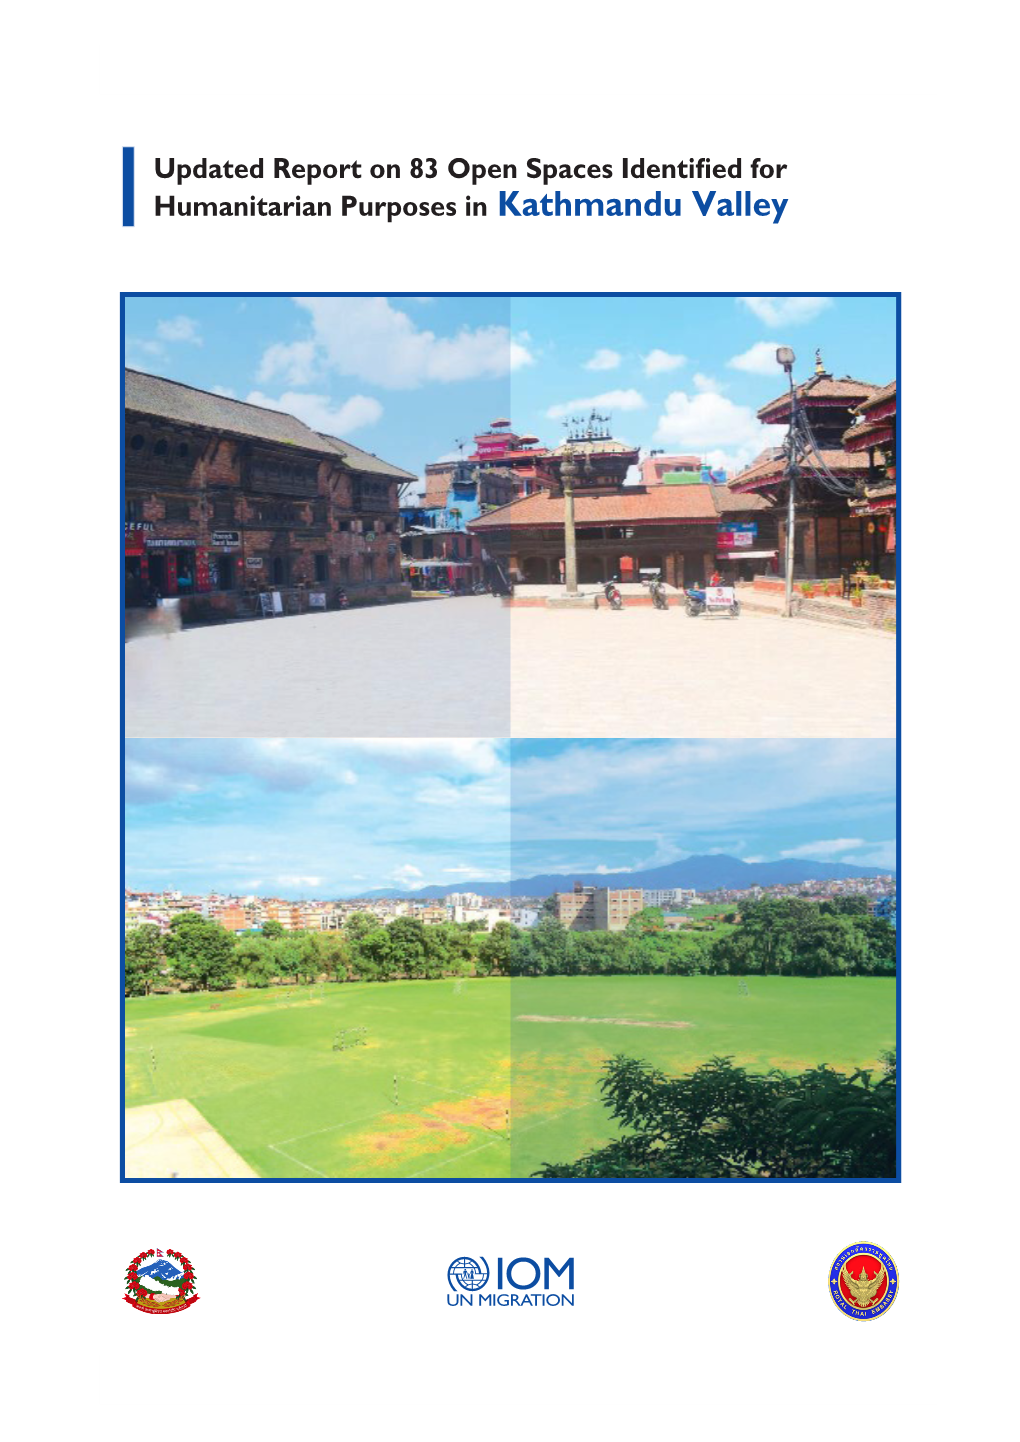 83 Open Spaces Identified for Humanitarian Purposes in Kathmandu Valley